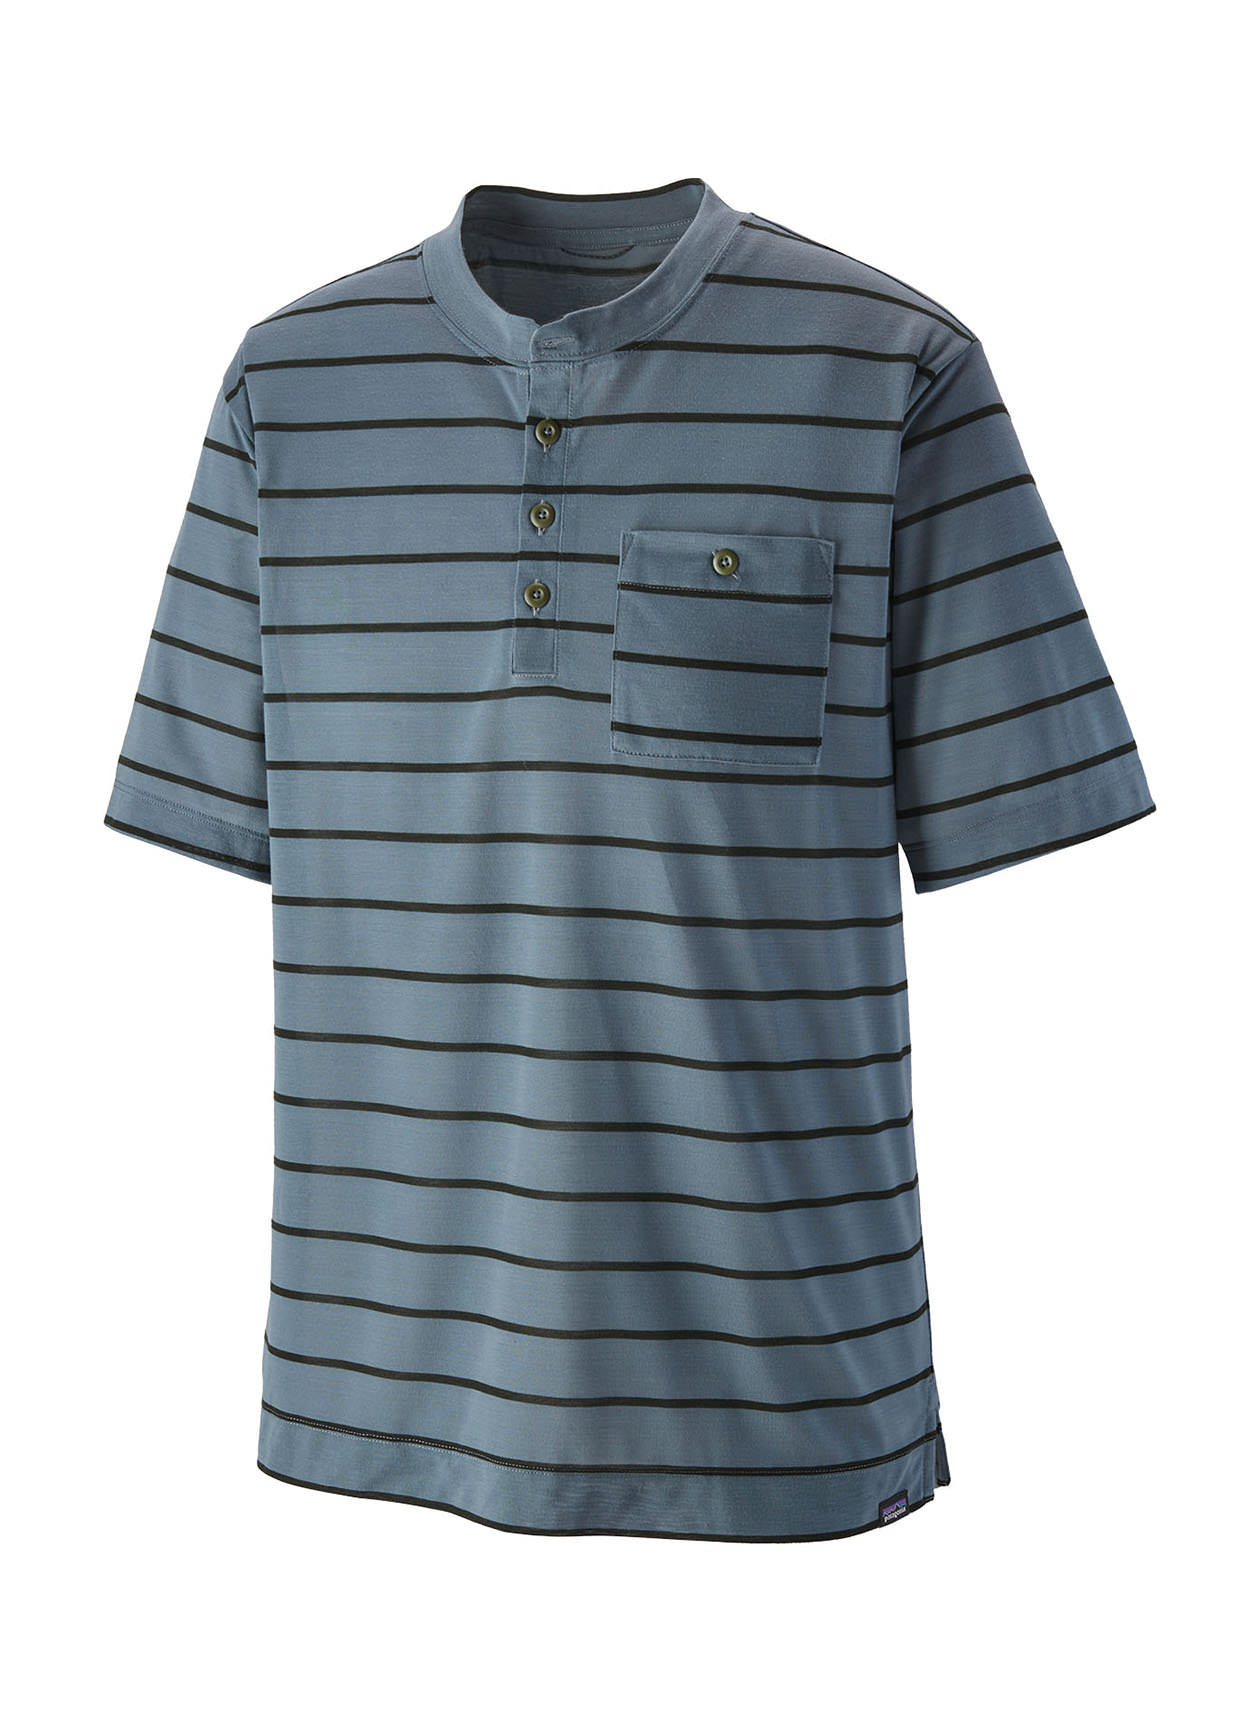 Eddie Bauer - Short Sleeve Performance Fishing Shirt. EB602 Gulf Teal / XL